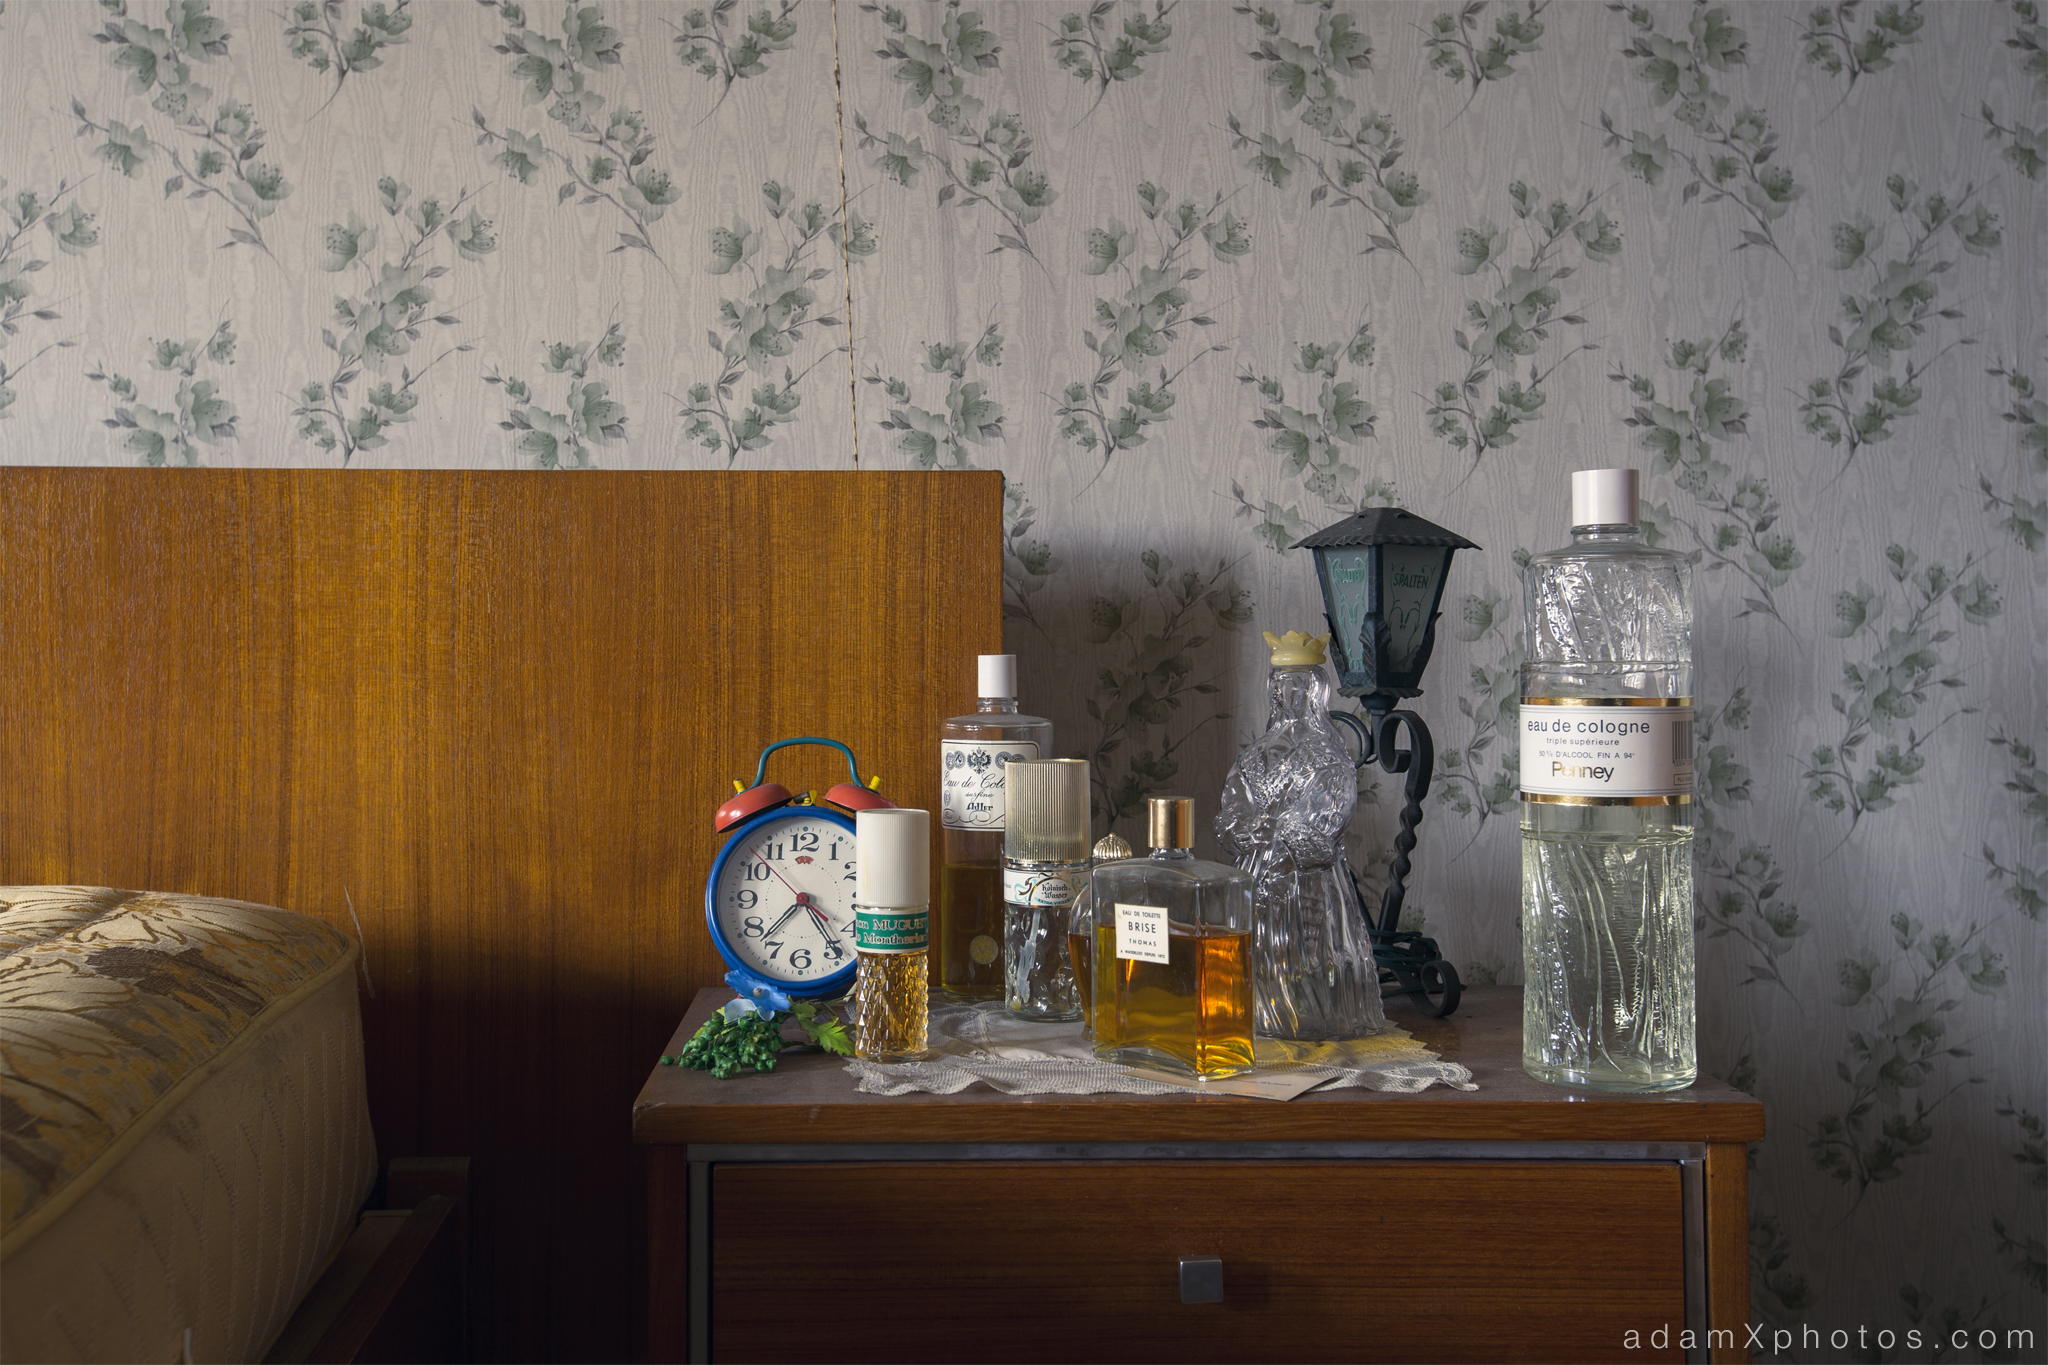 Maison l'oiseau bleu - bedroom detail and perfumes